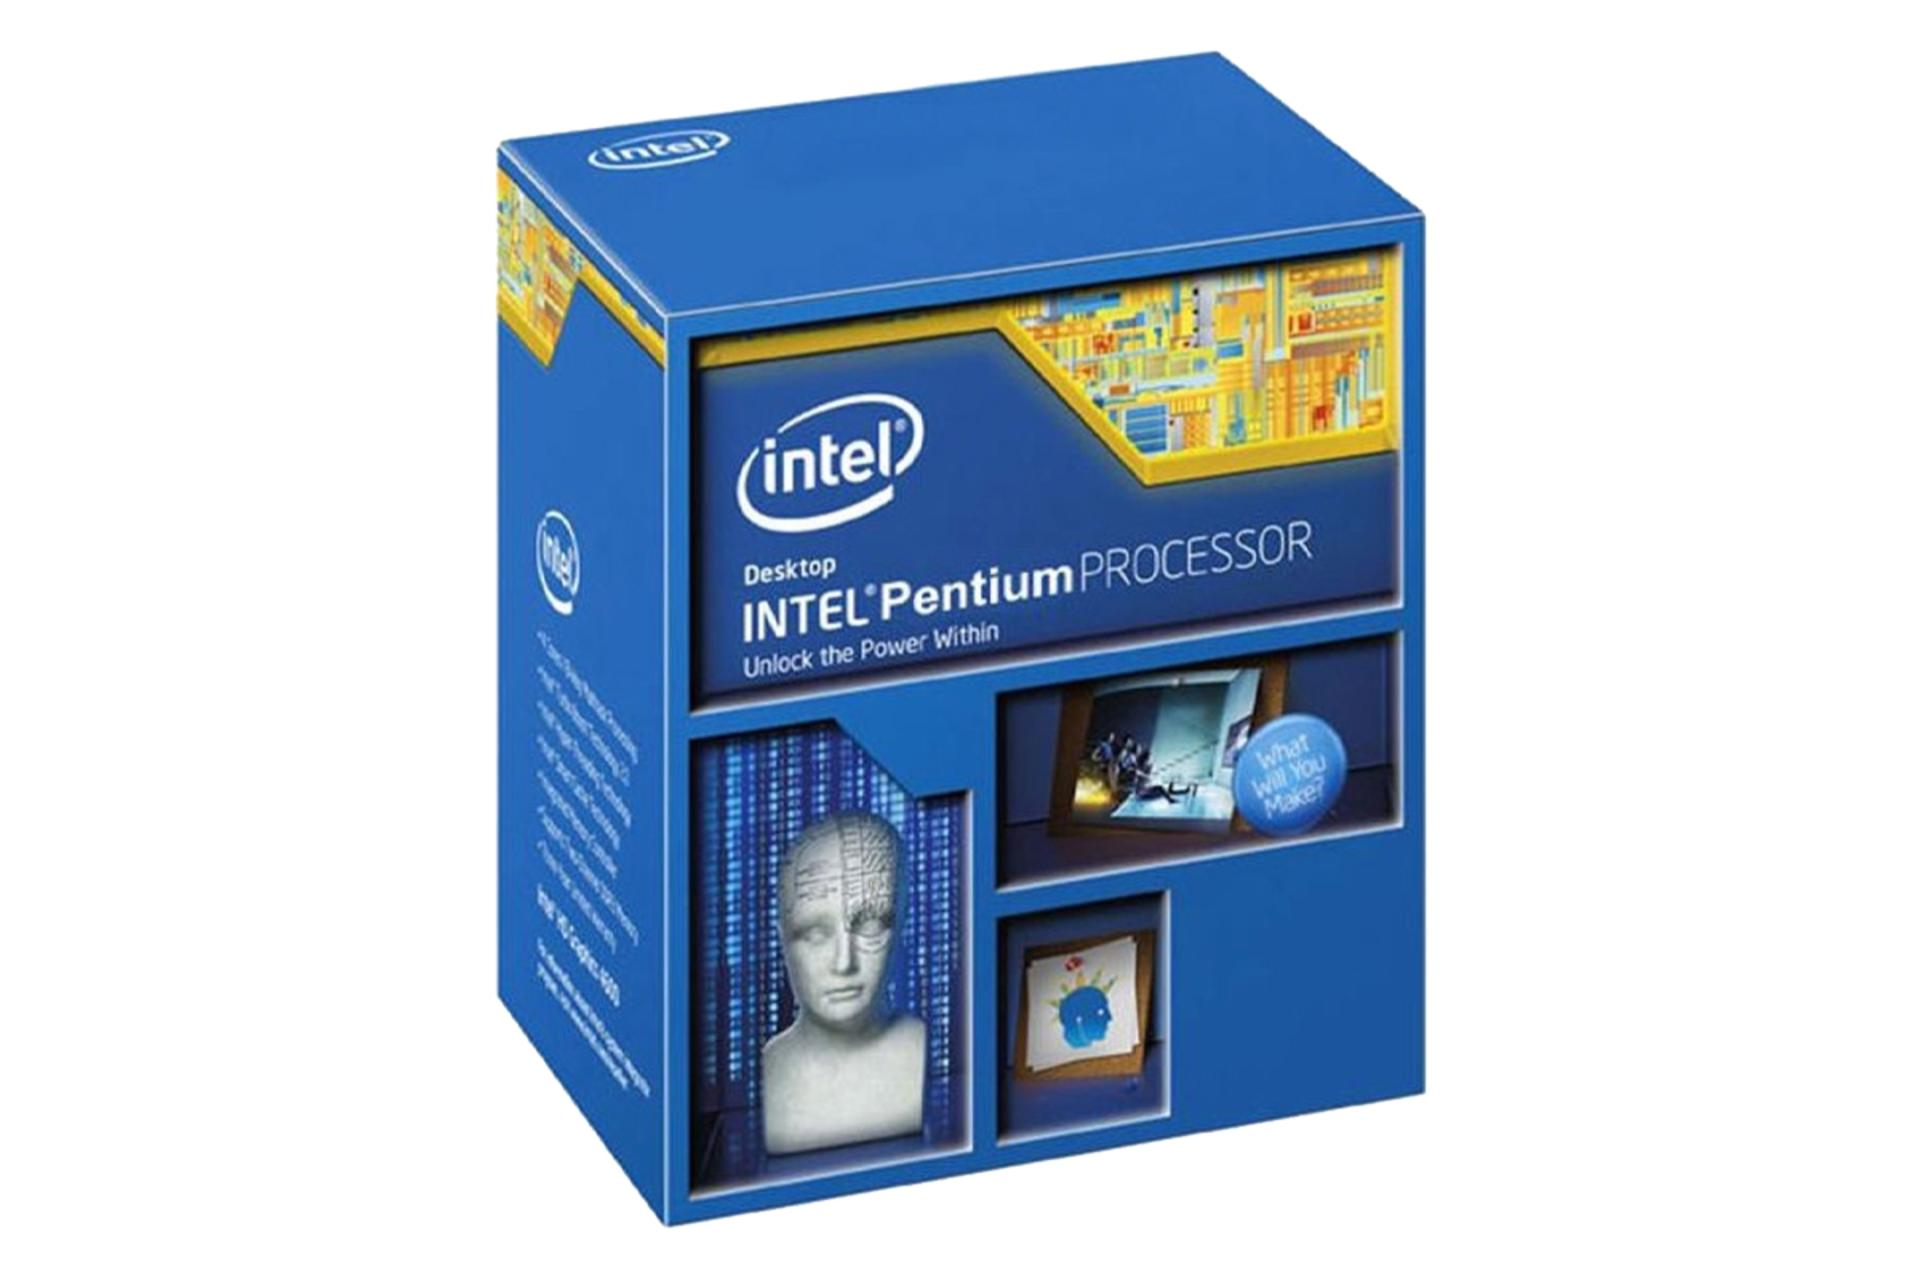  Intel Pentium G3220t / پنتیوم G3220t اینتل